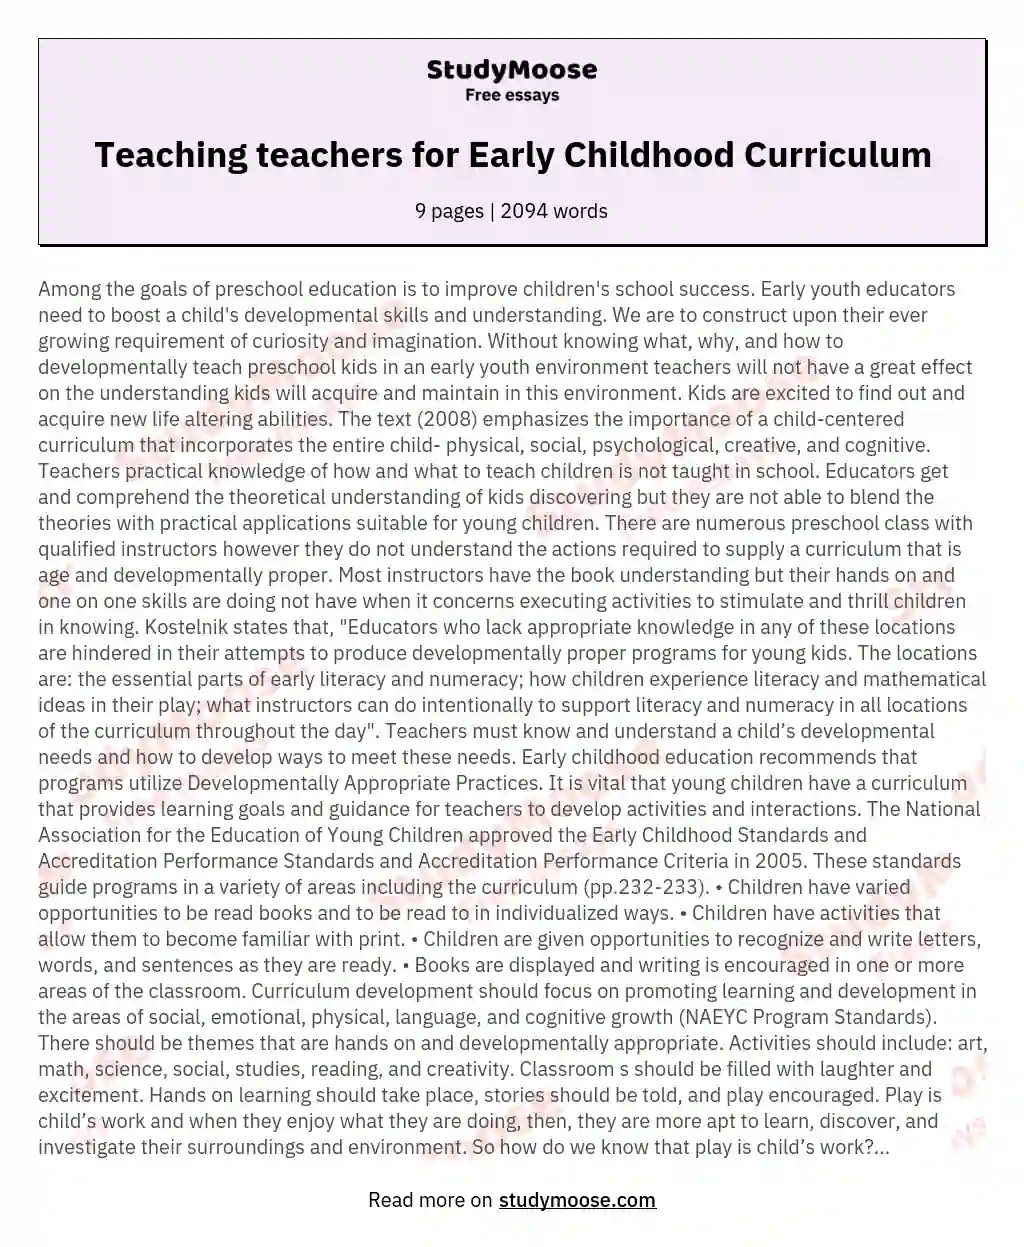 Teaching teachers for Early Childhood Curriculum essay